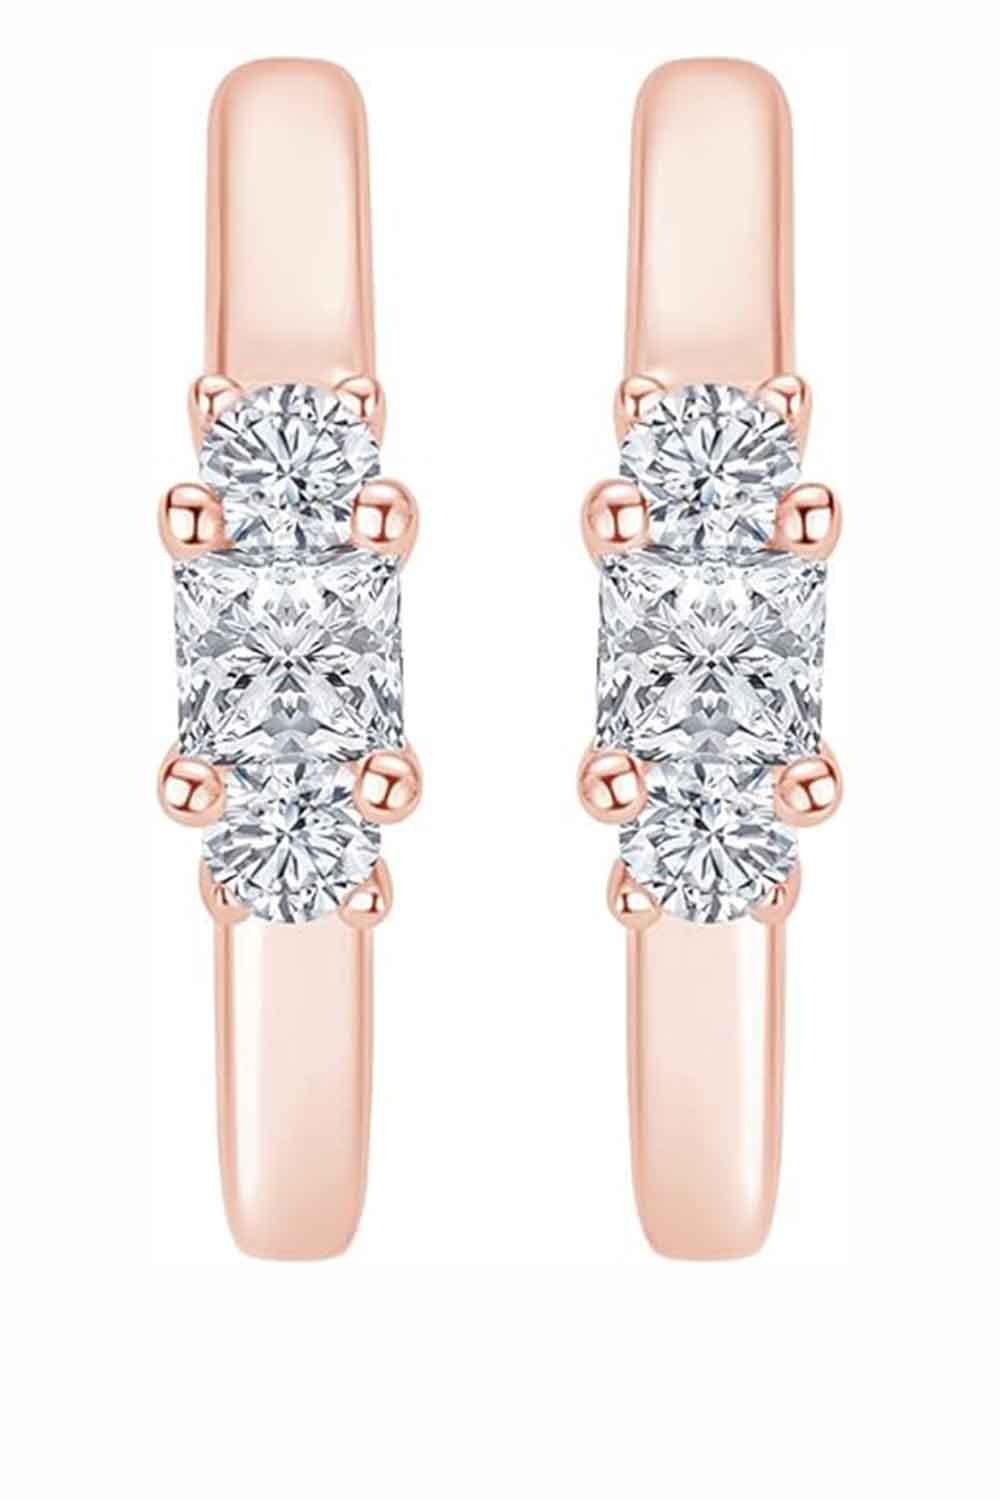 Rose Gold Color Princess Cut Hoop Earrings for Women, Studs for Women